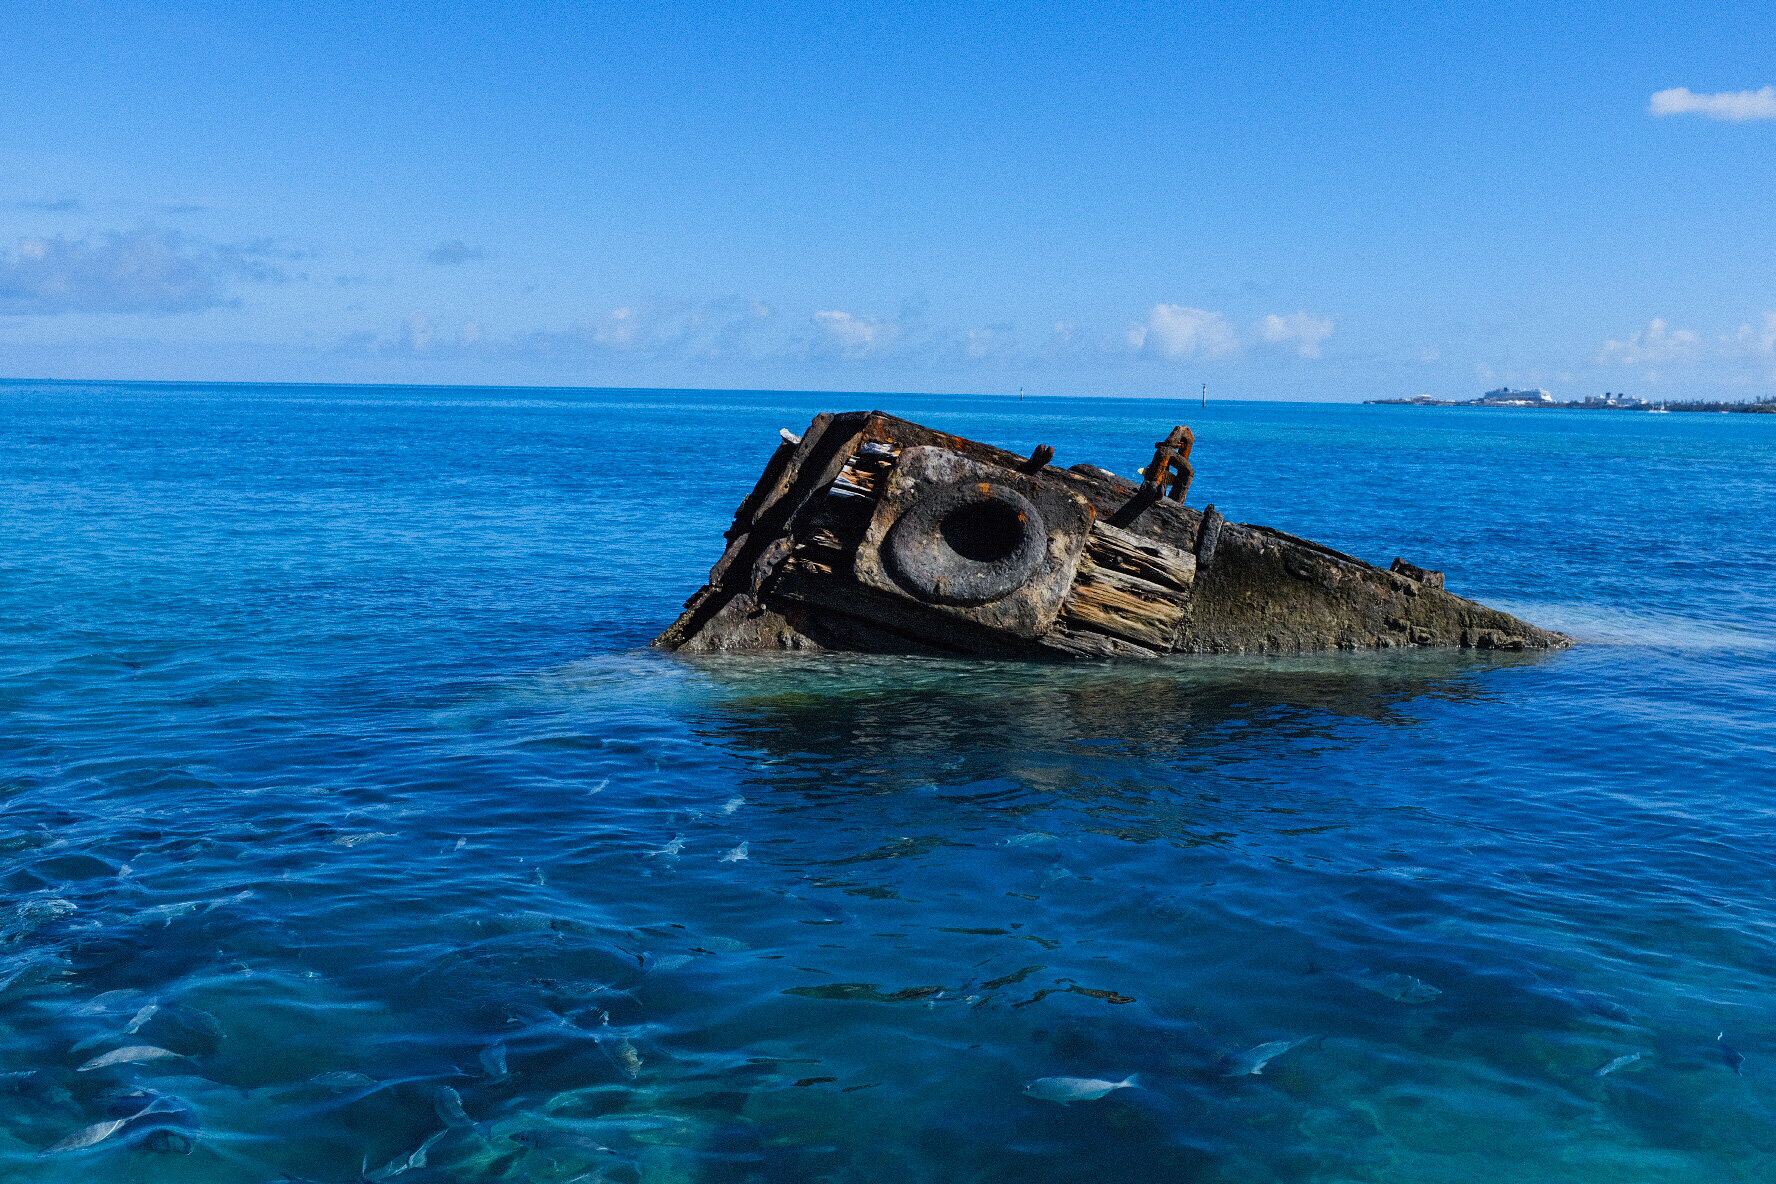  Shipwreck, Bermuda 2019 